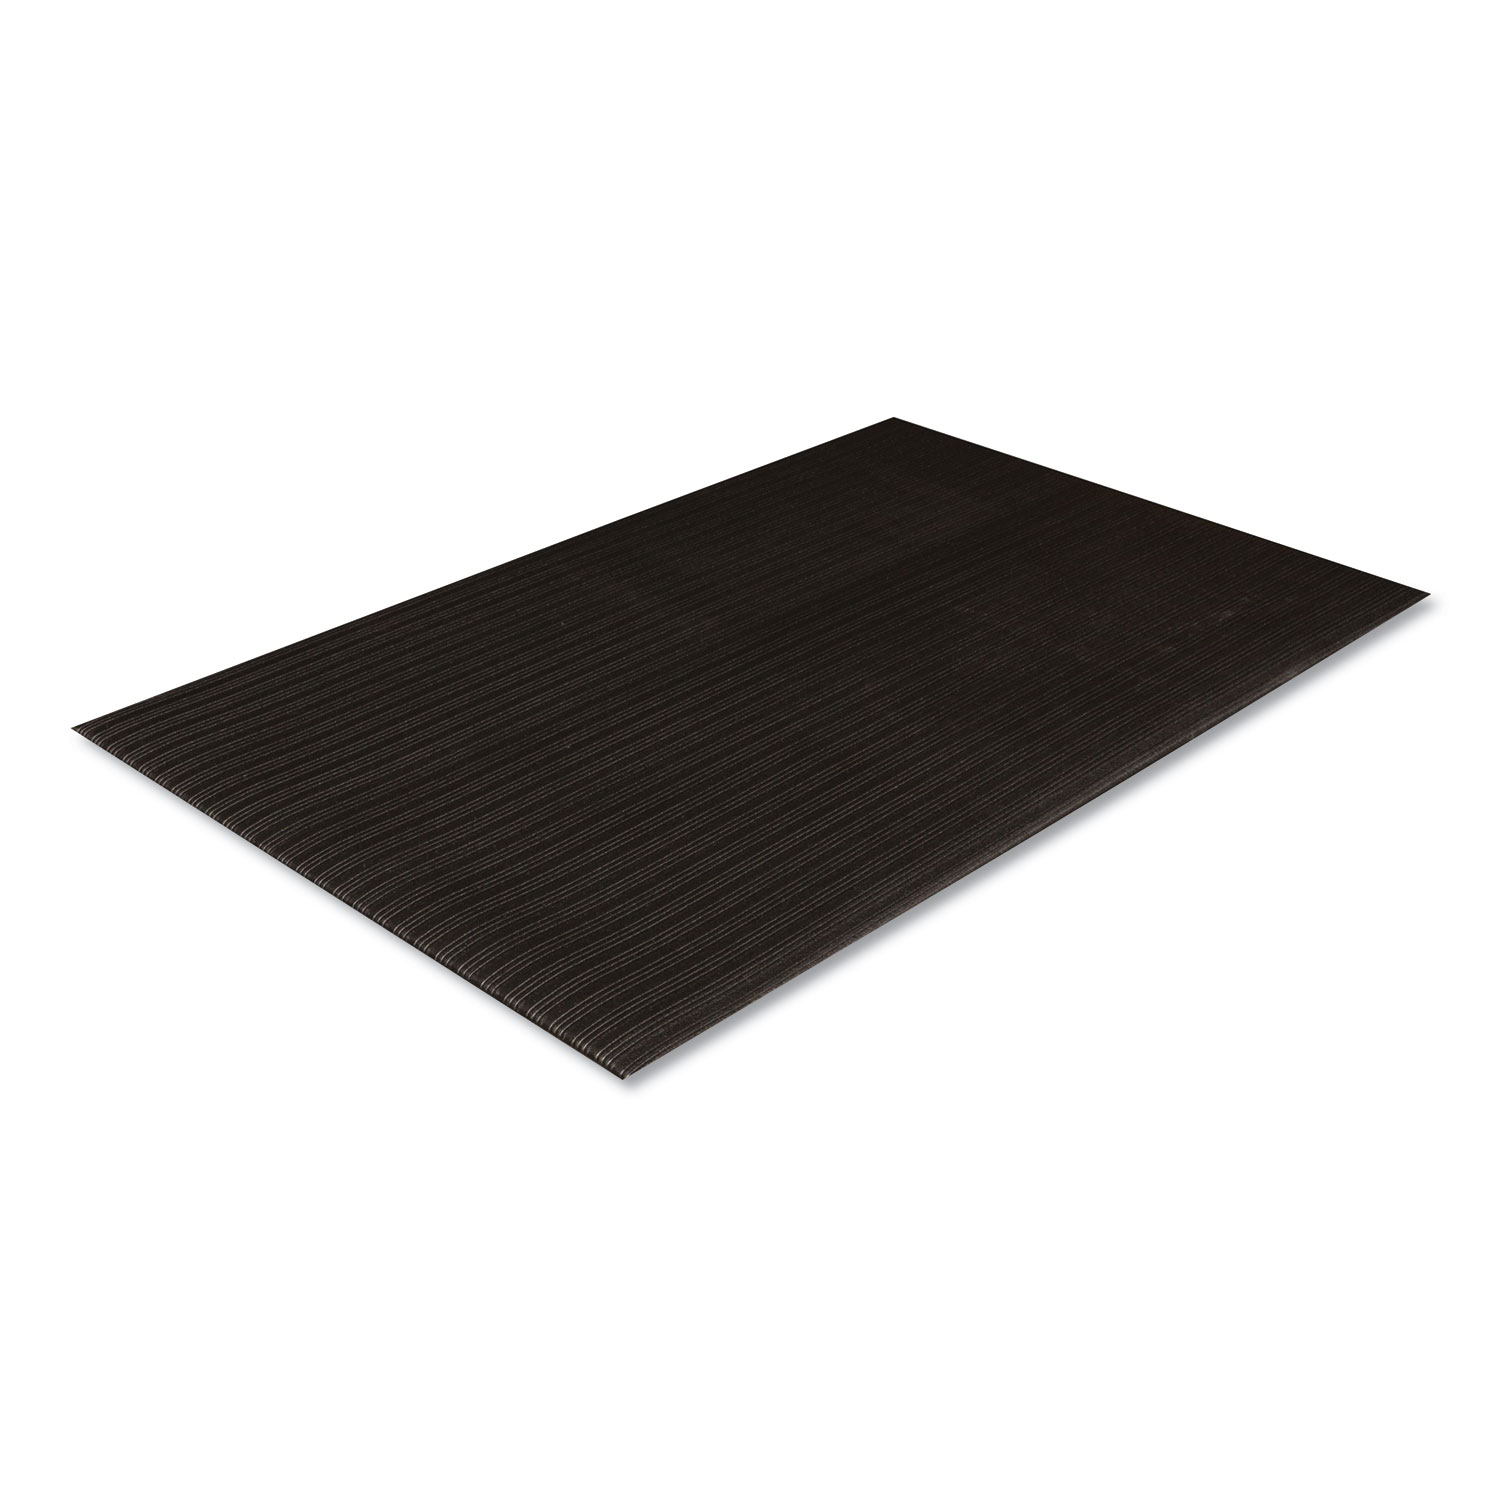  Crown FL 3660BK Ribbed Vinyl Anti-Fatigue Mat, 36 x 60, Black (CWNFL3660BK) 